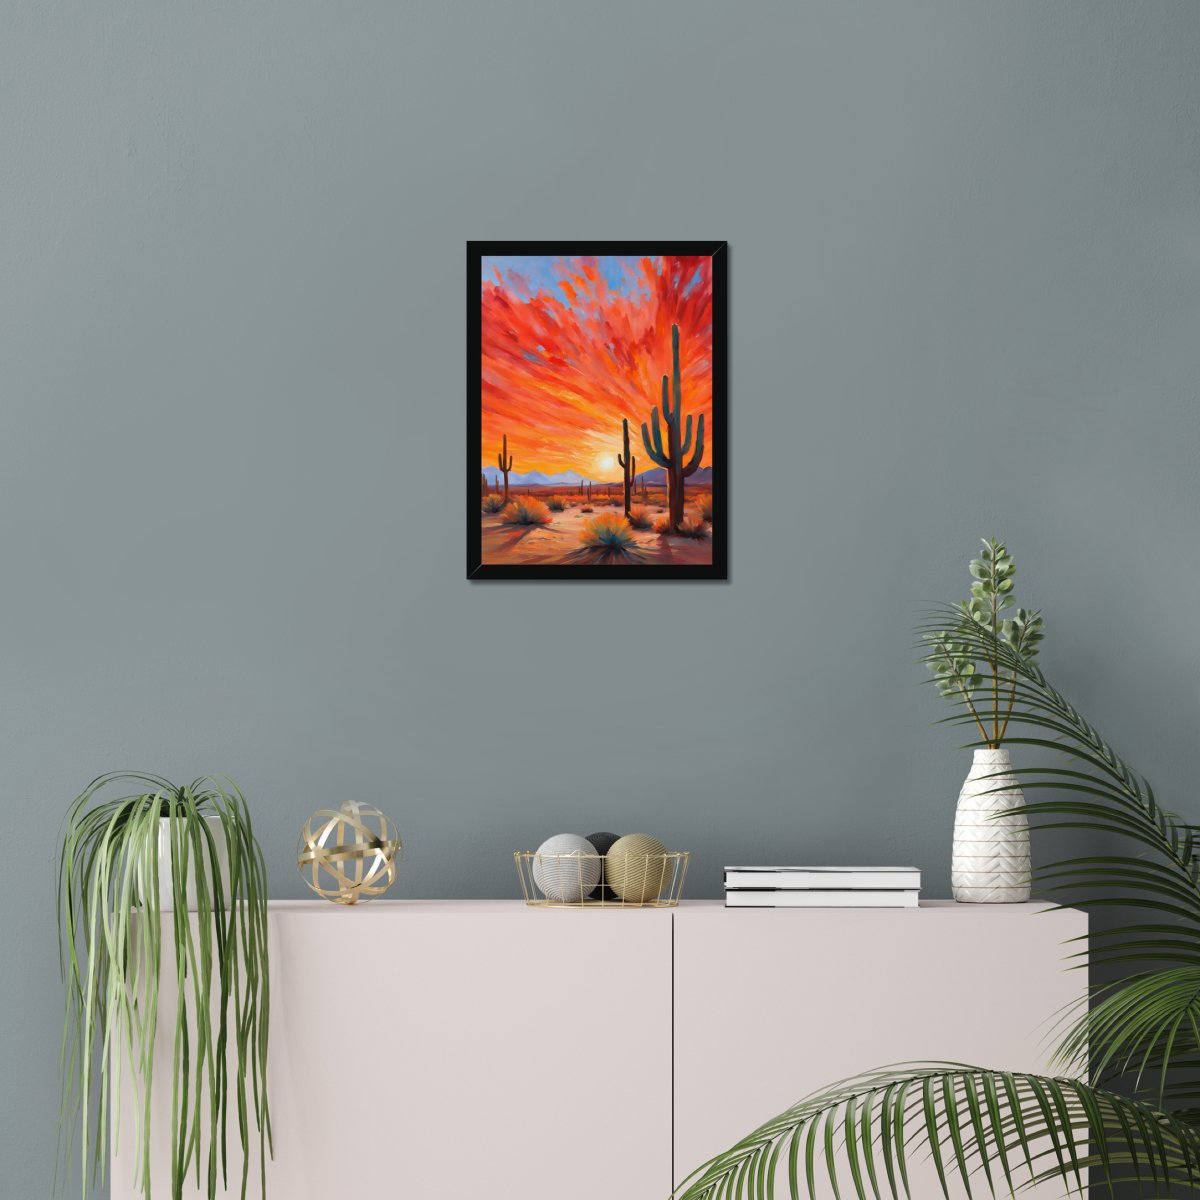 Arizona sunset - Art print - Poster - Ever colorful